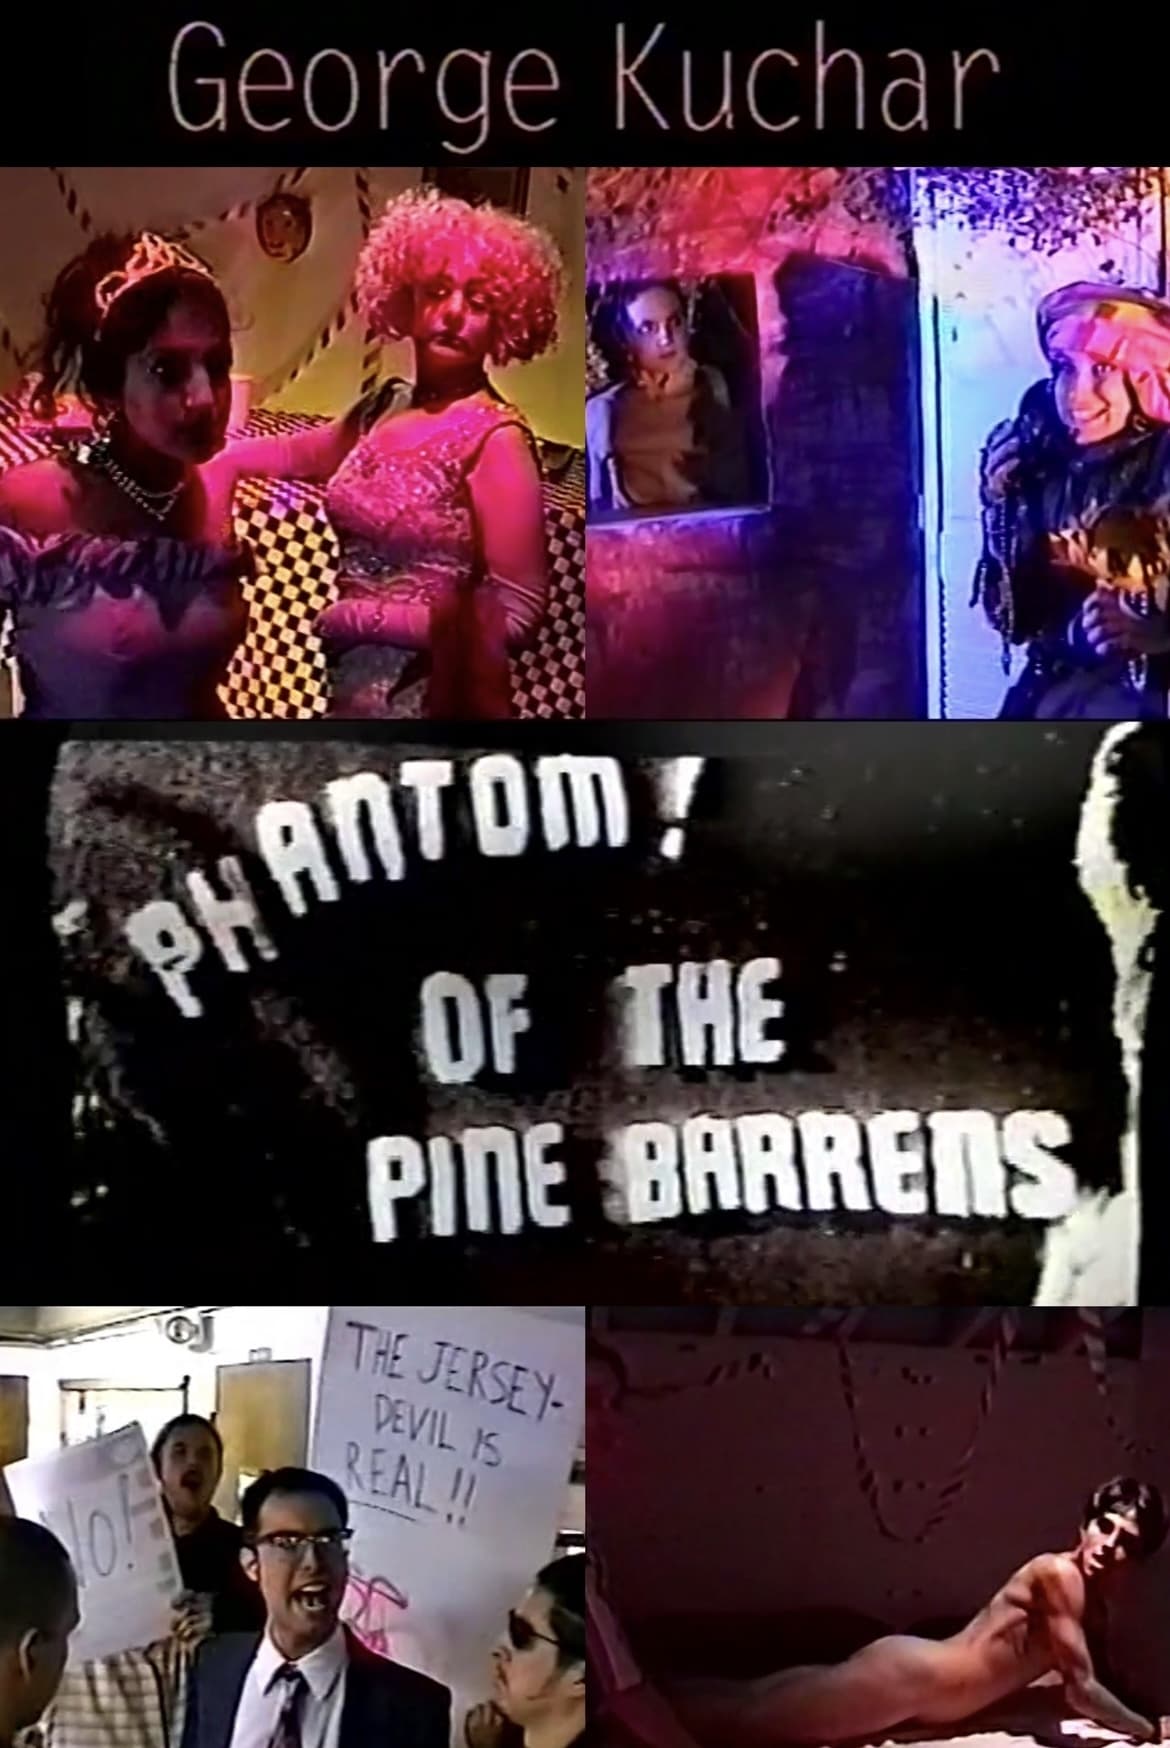 Phantom of the Pine Barrens (1998)